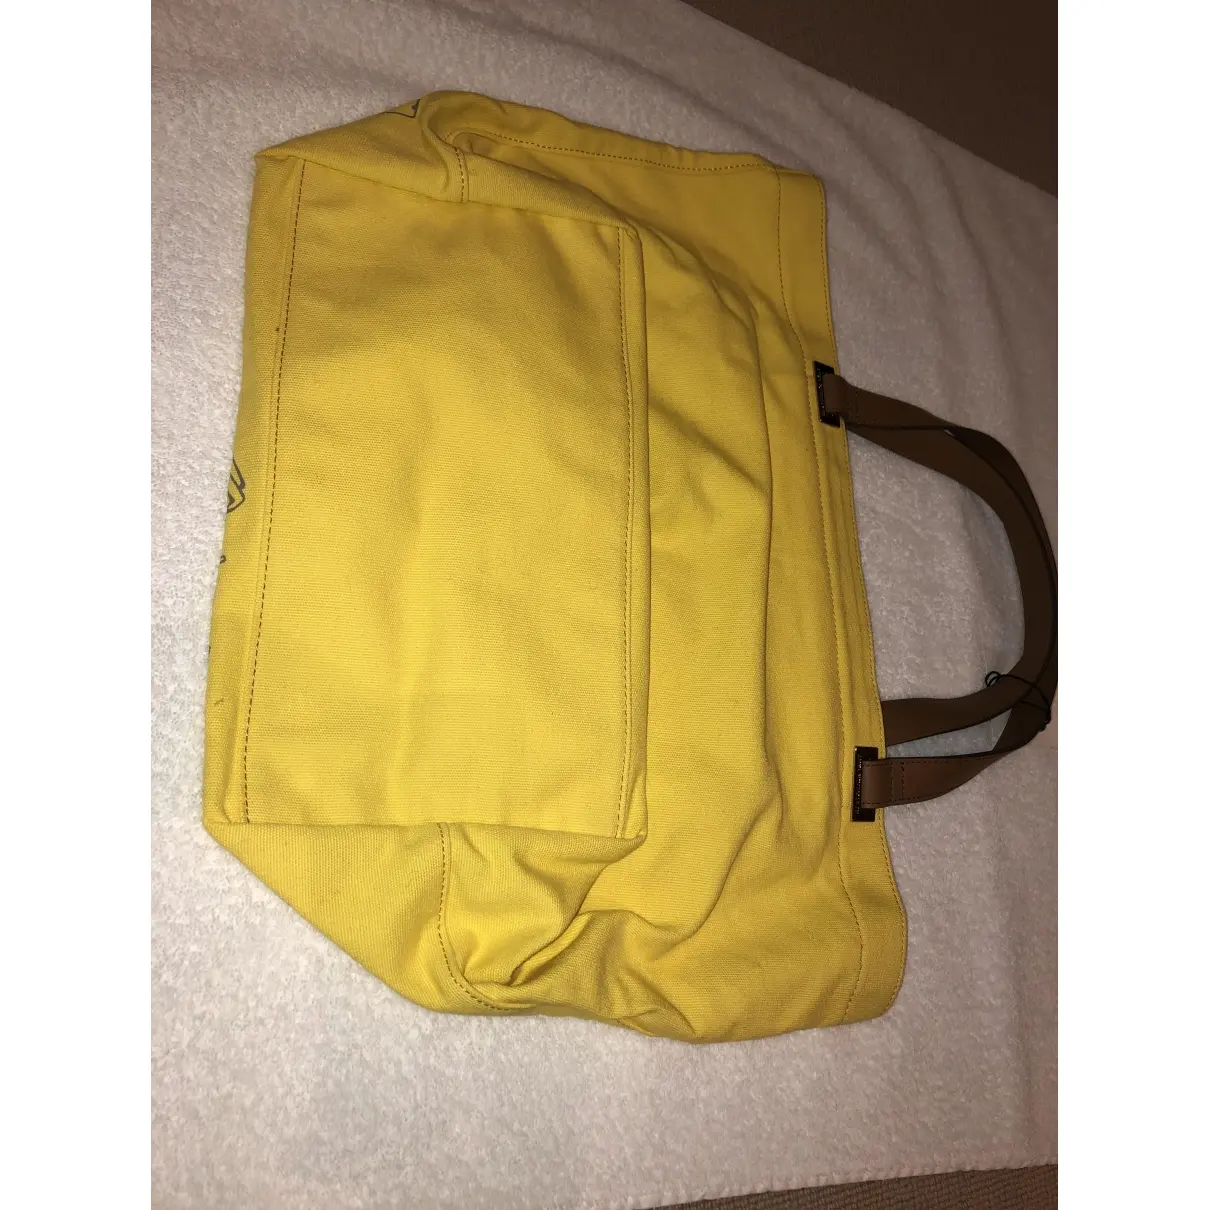 Anya Hindmarch Travel bag for sale